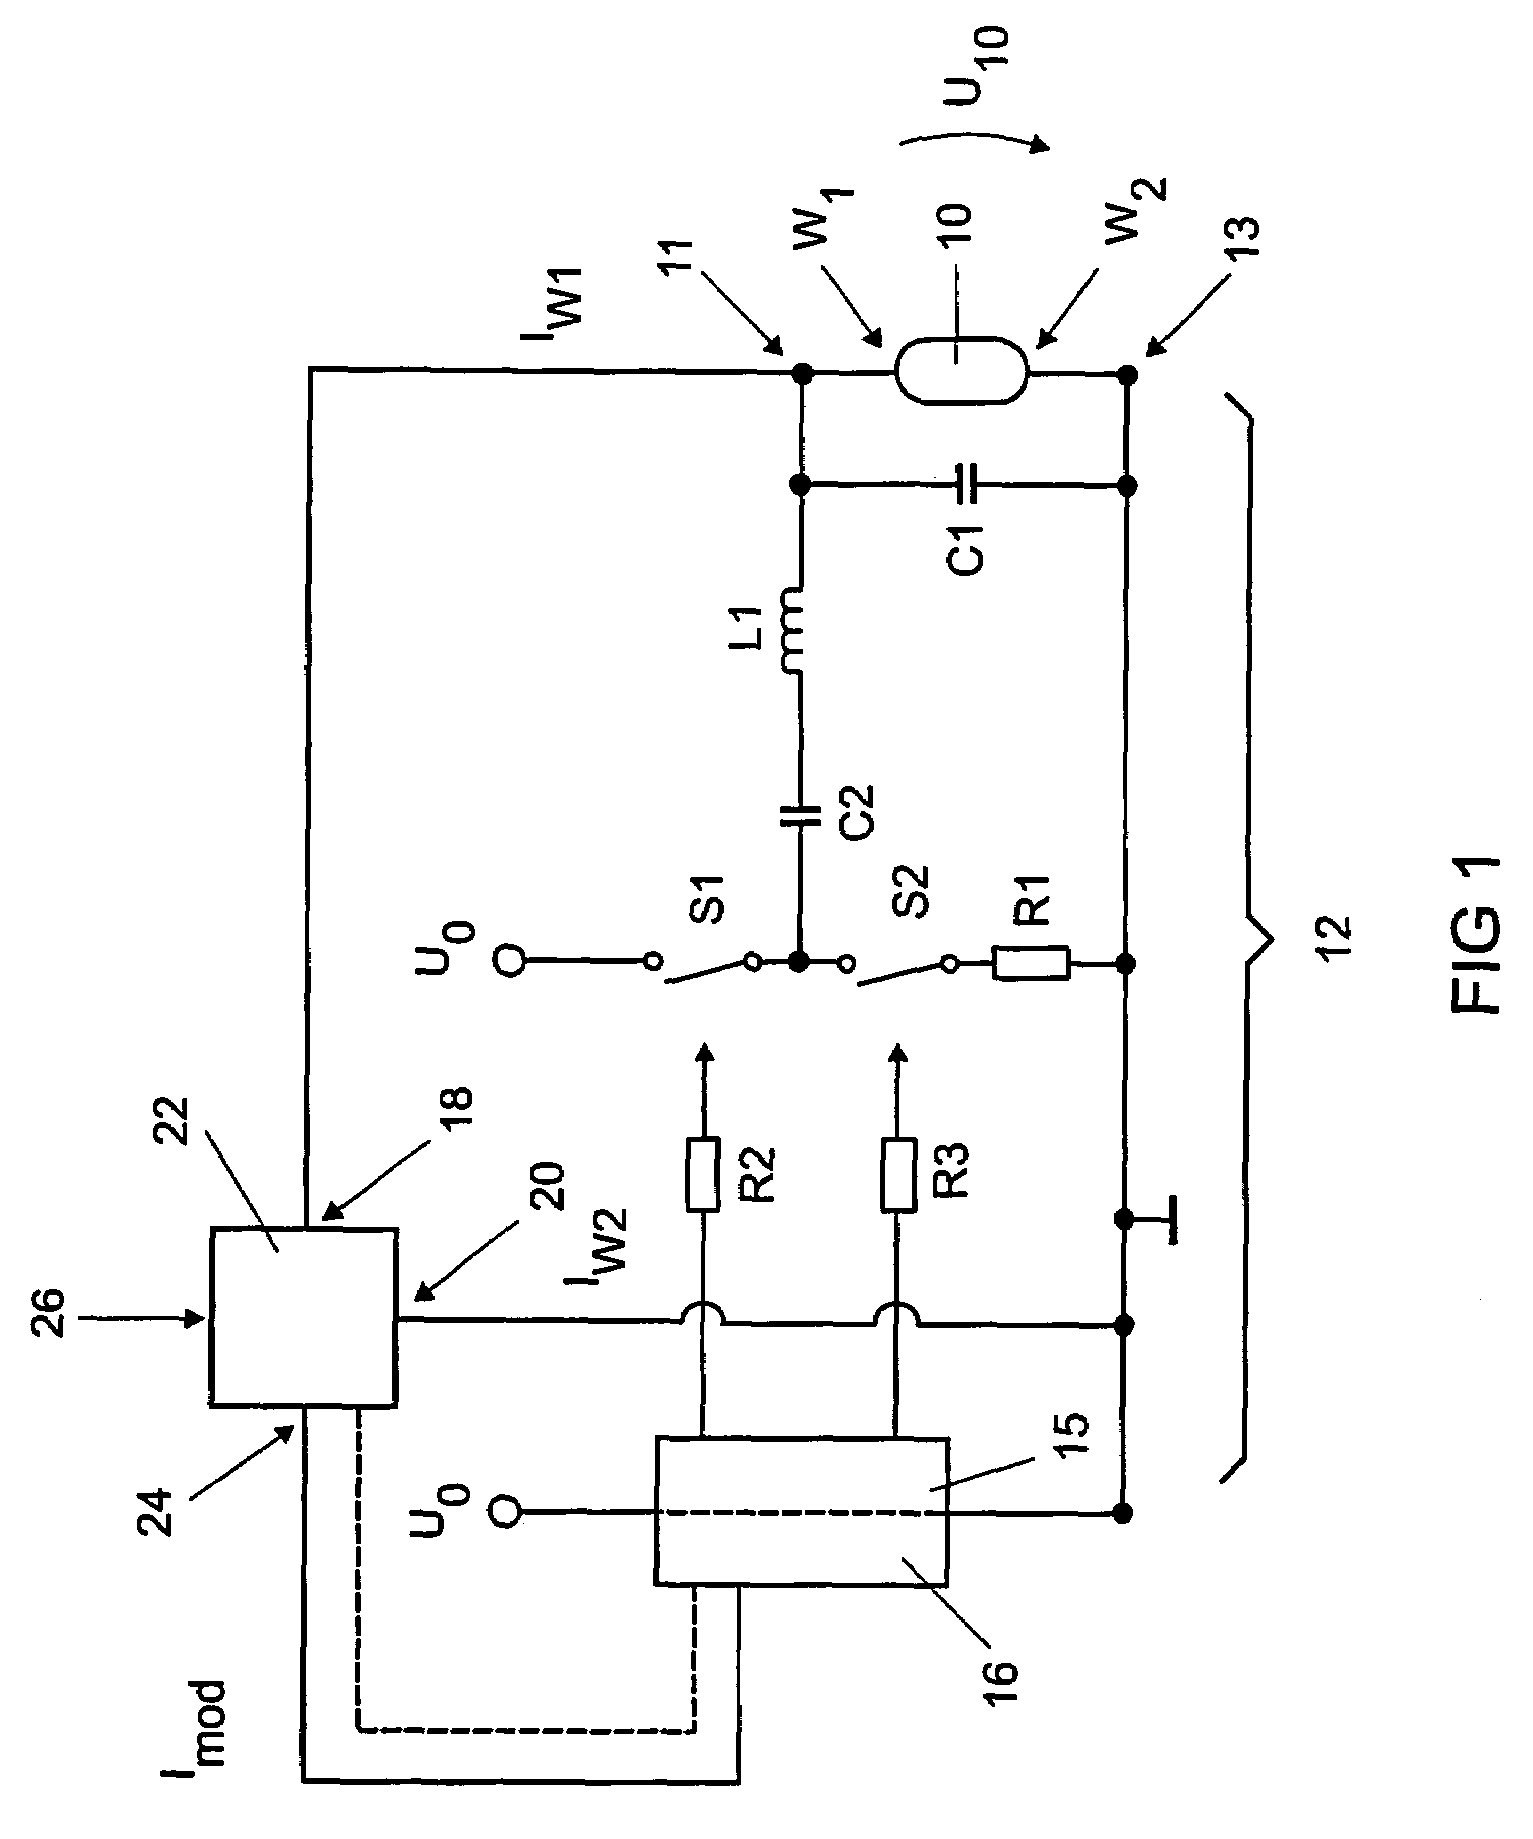 Circuit arrangement having protective circuit and modification apparatus